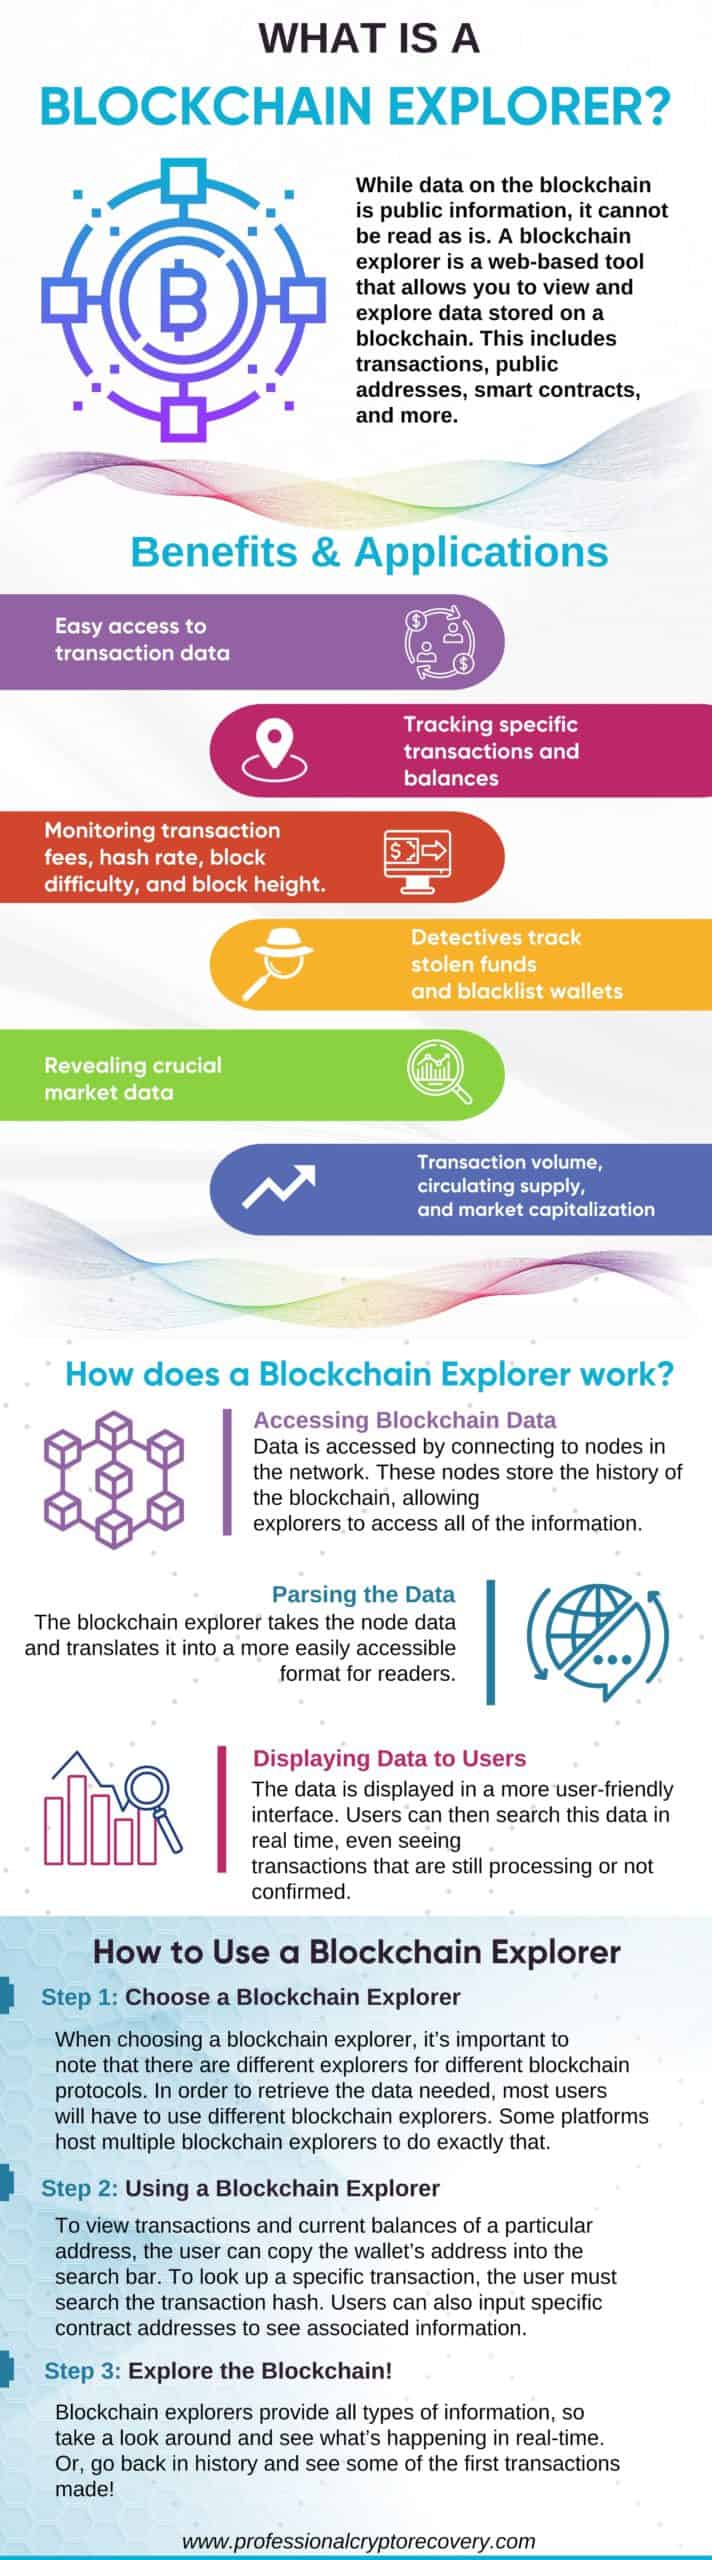 Blockchain Explorer Infographic